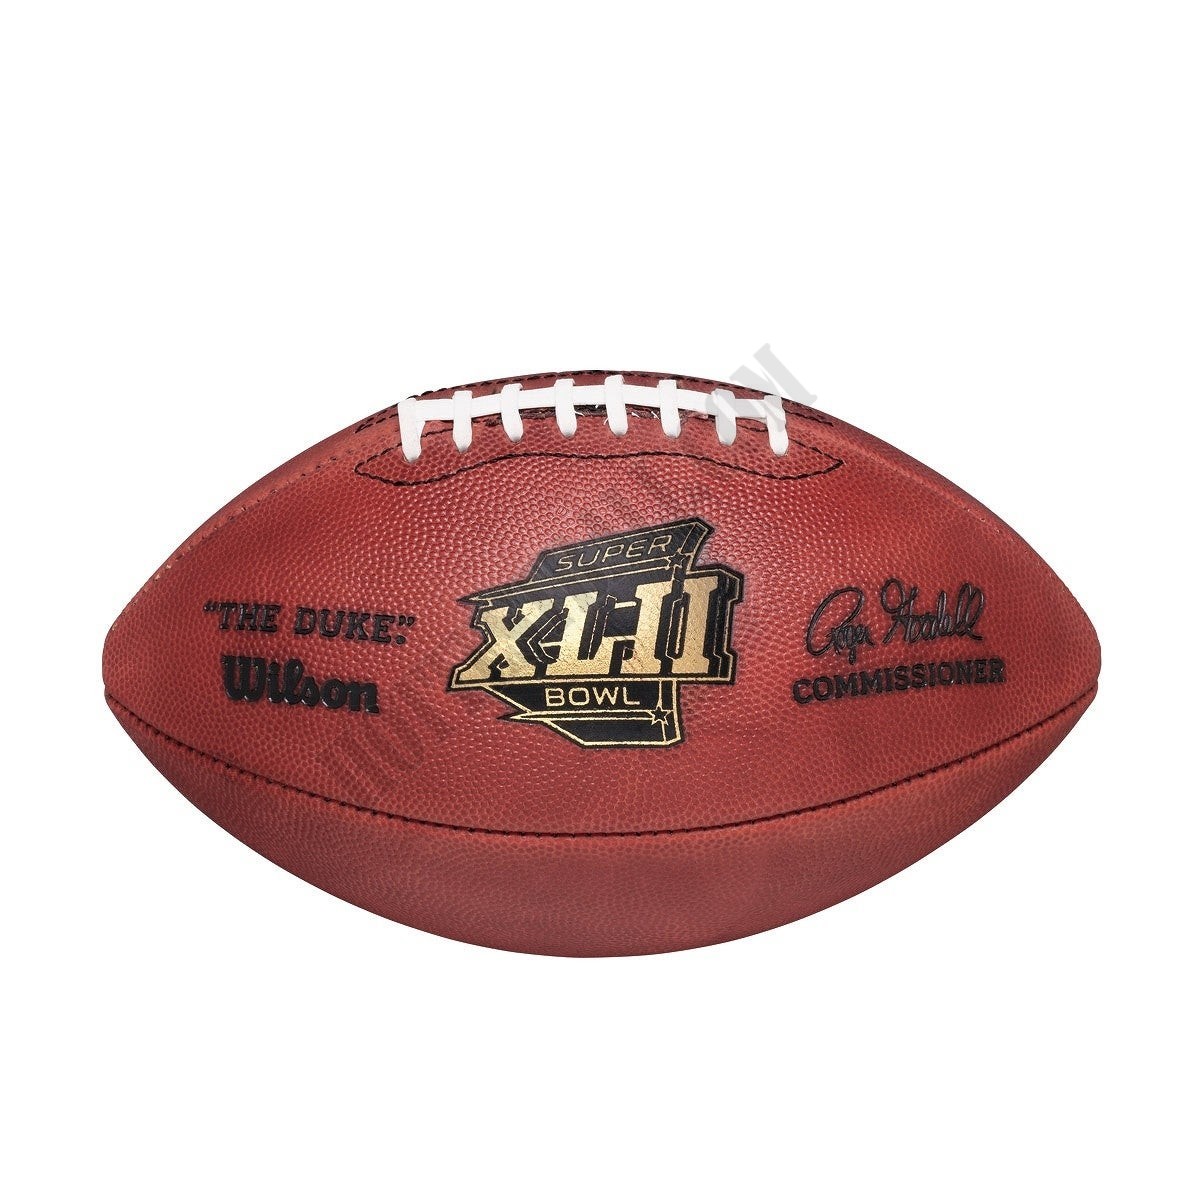 Super Bowl XLII Game Football - New York Giants ● Wilson Promotions - Super Bowl XLII Game Football - New York Giants ● Wilson Promotions